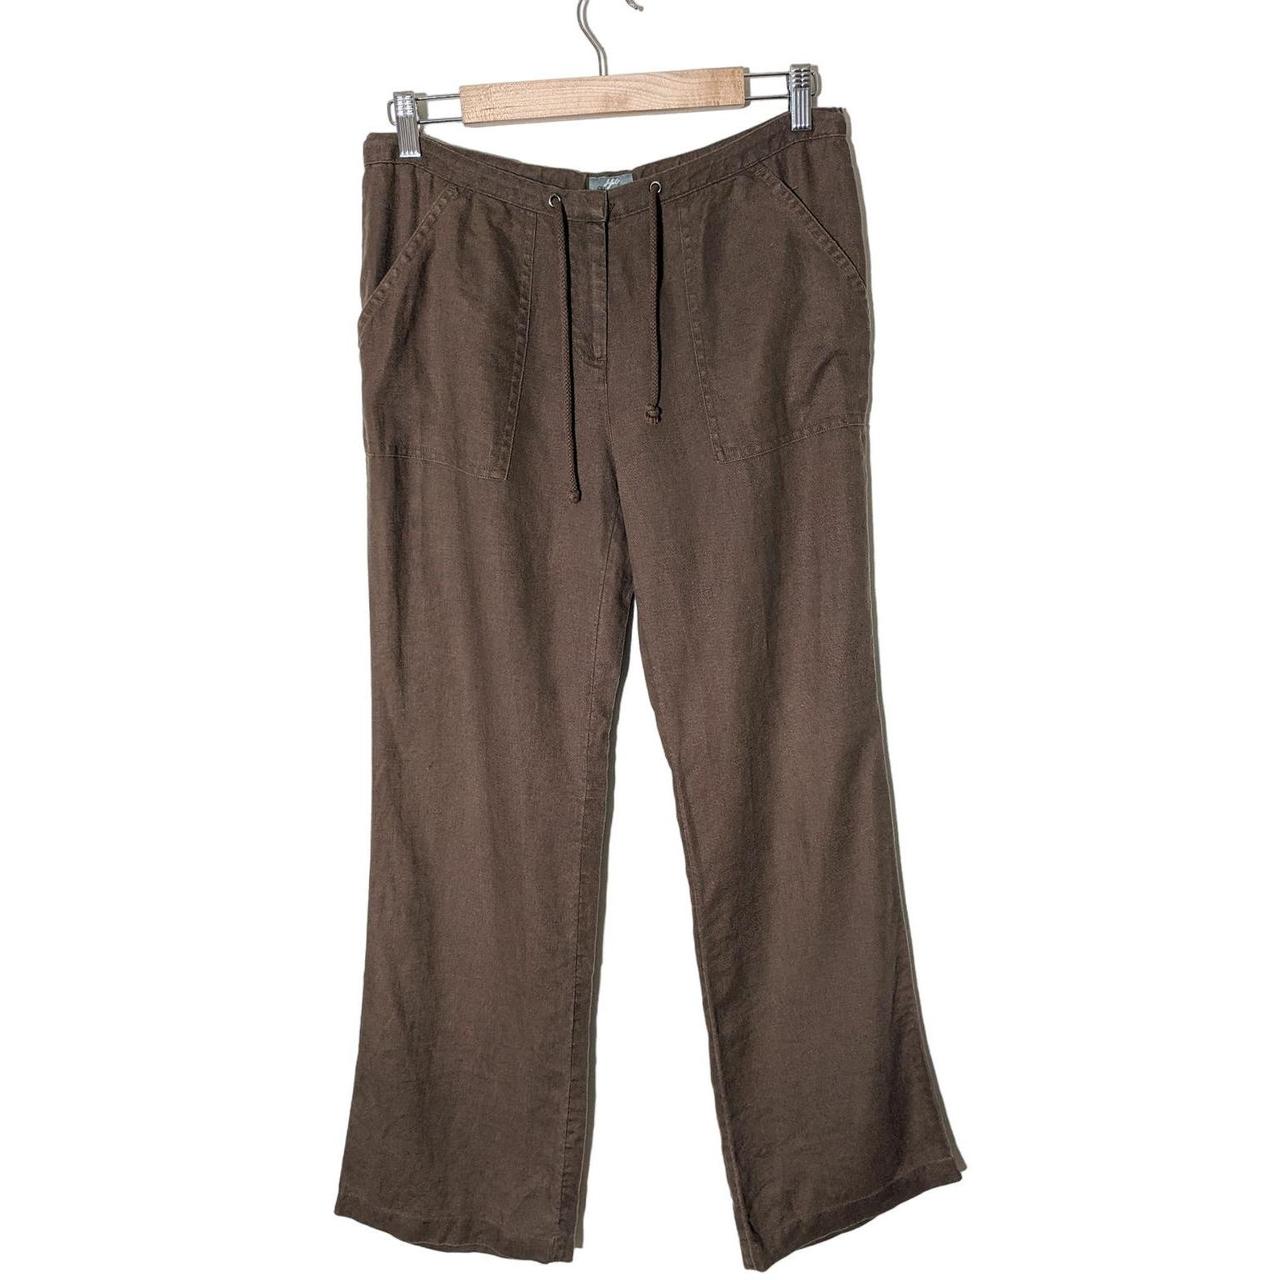 J. Jill Linen Pants - Chocolate brown color - 100%... - Depop